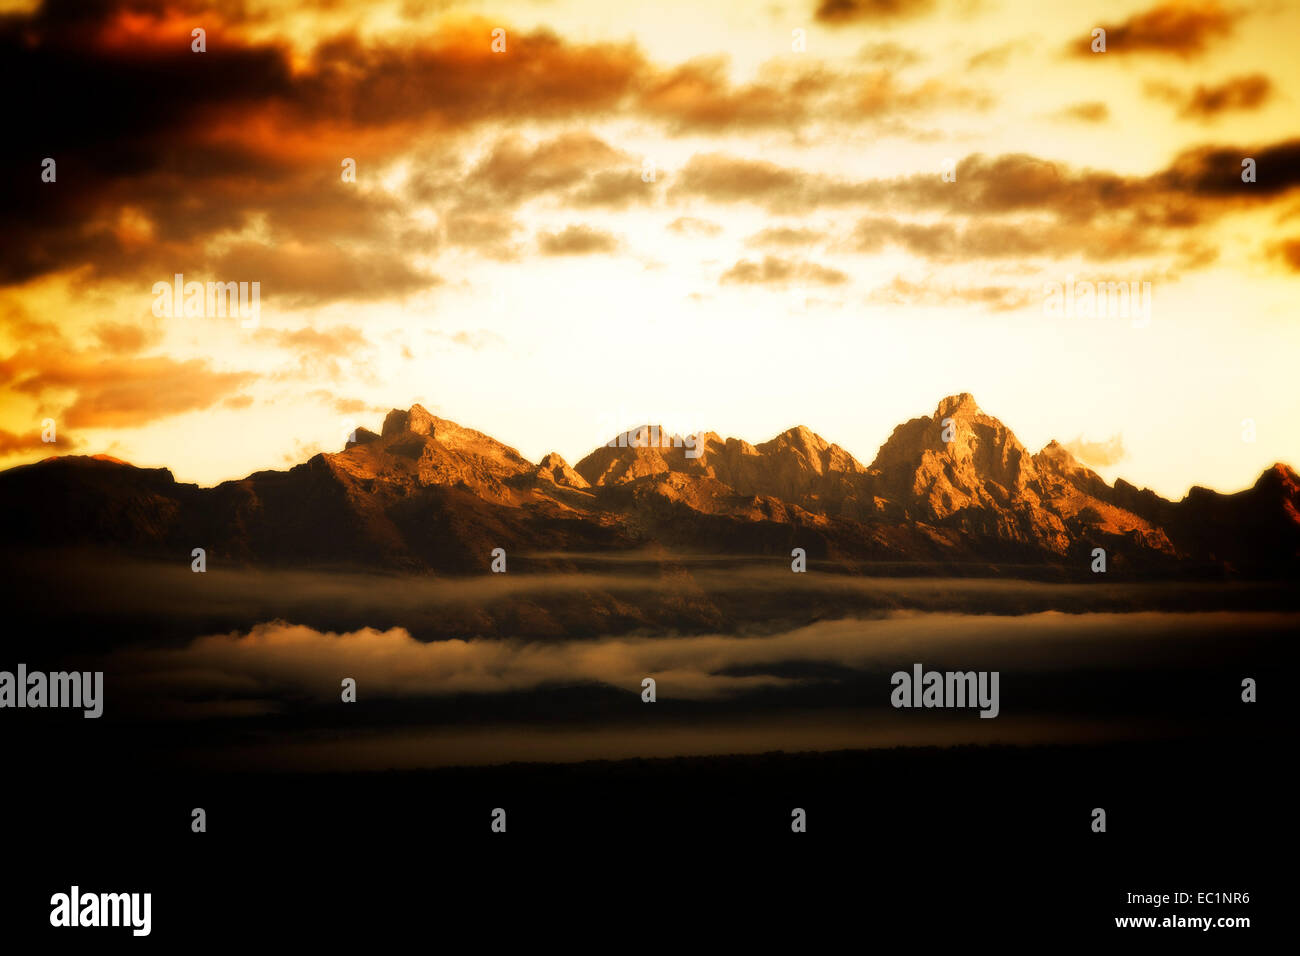 The Teton mountain range in Wyoming at sunrise. Stock Photo